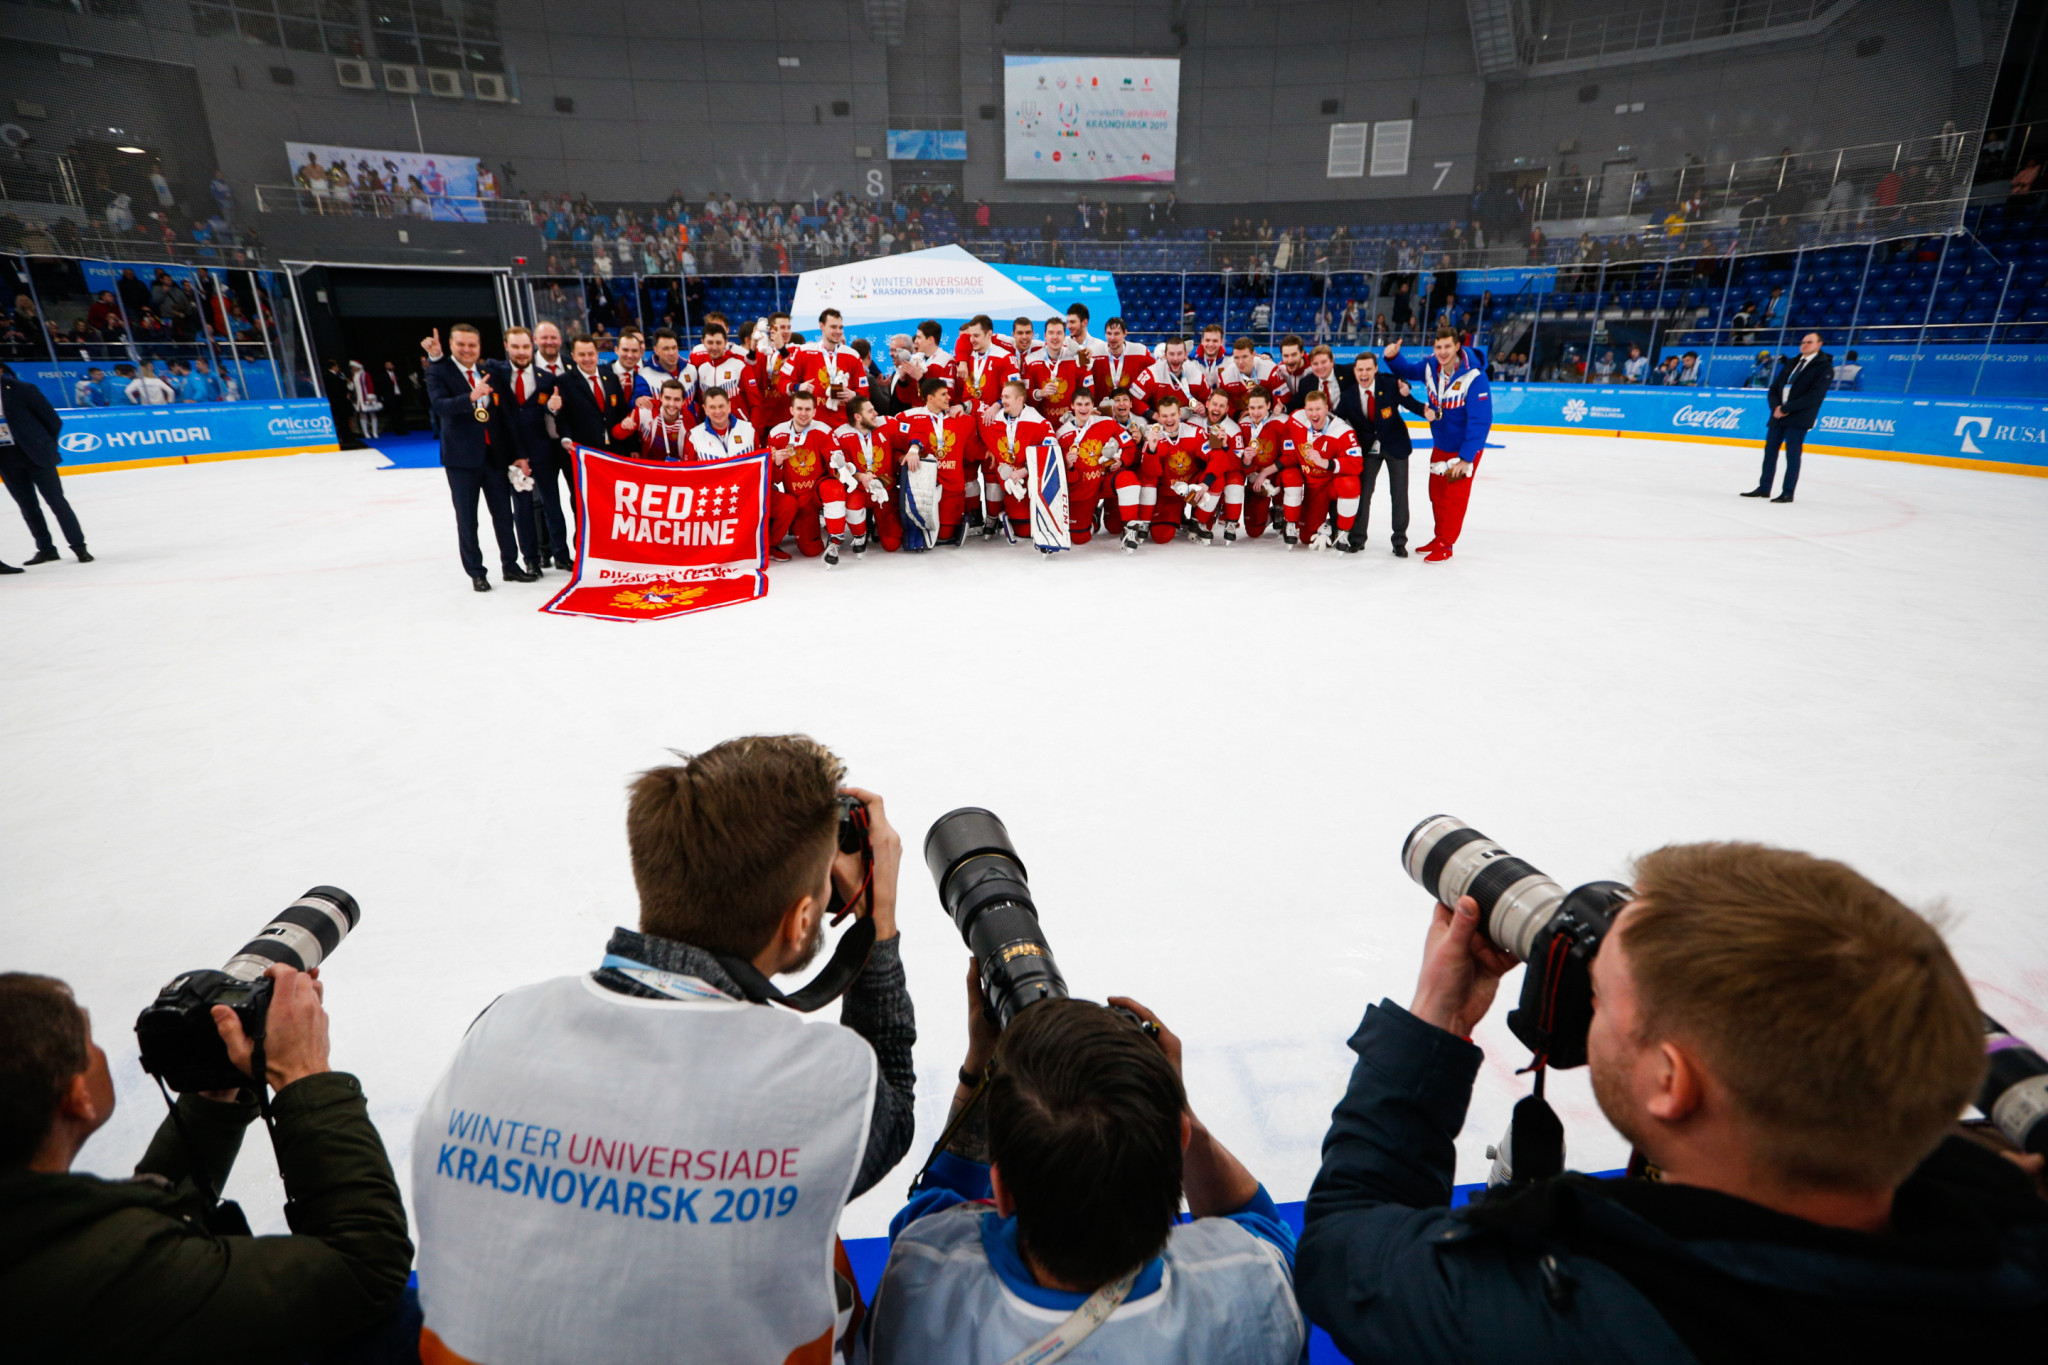 Russia won the final 2-1, taking the last gold medal of the 2019 Winter Universiade ©Krasnoyarsk 2019